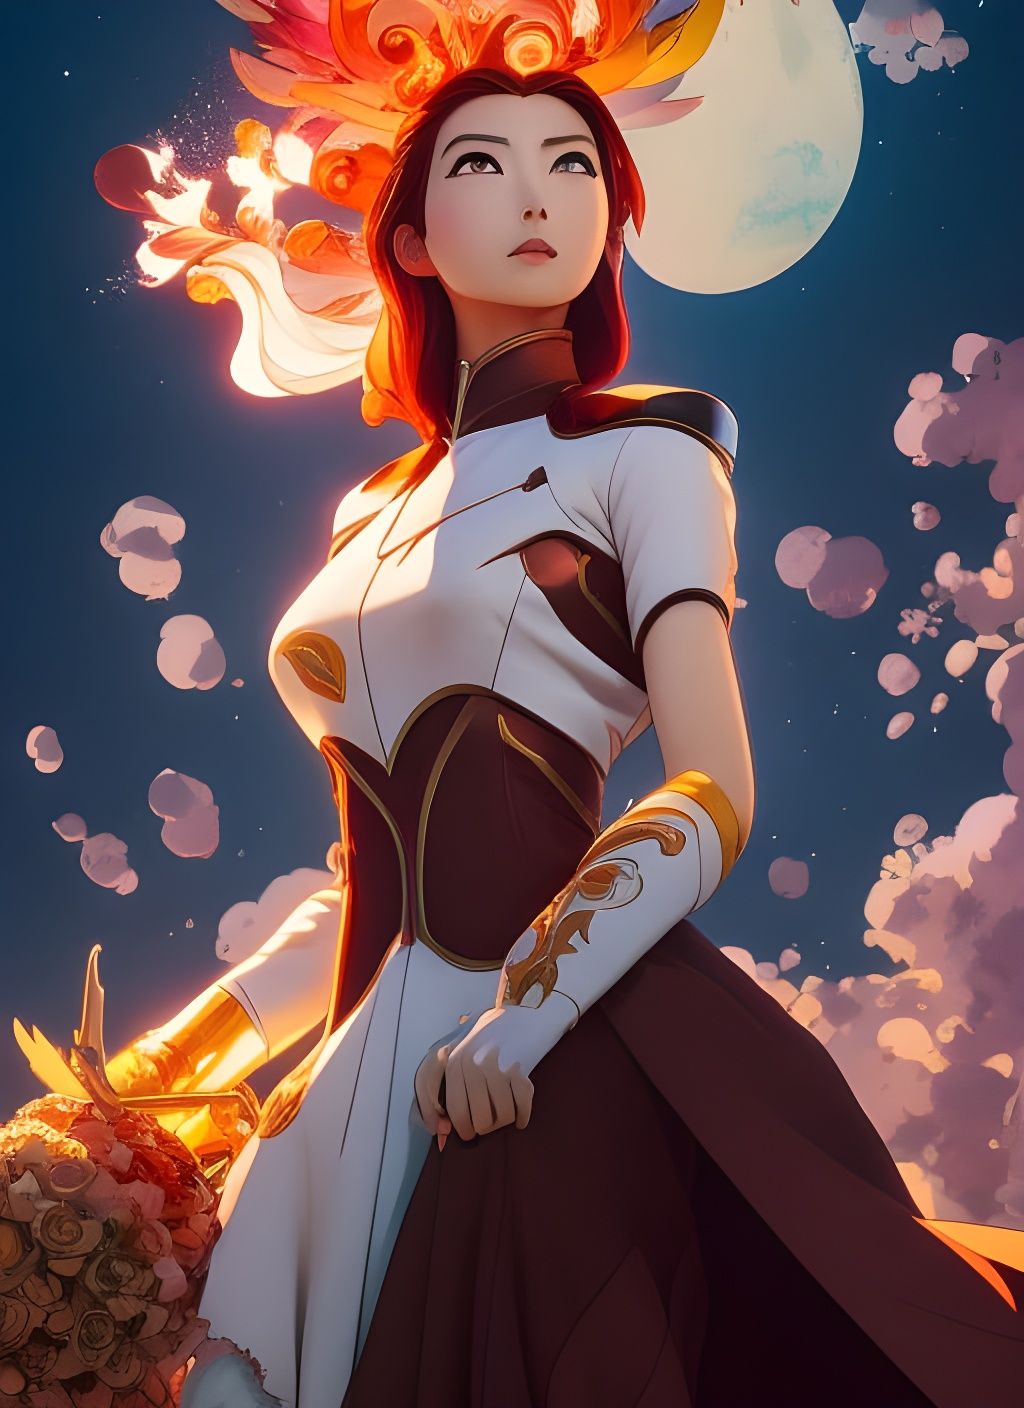 Lexica - Anime, close up portrait woman with fire magic, volcanic landscape